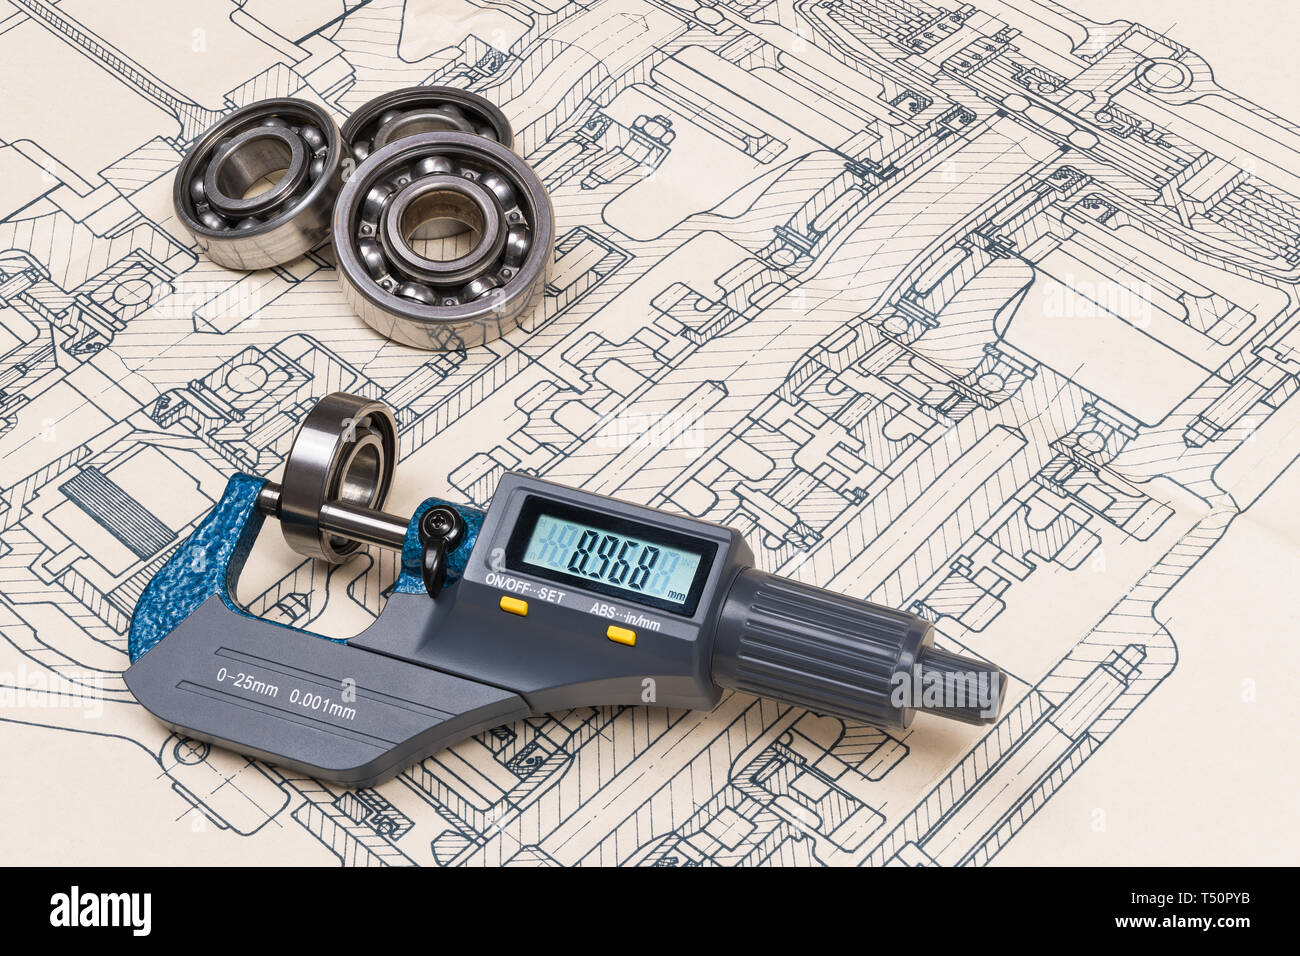 Micrometer screw gauge. Ball bearings. Drawing on background. Accurate measuring tool. Digital display. Round metal parts group. Engineering design. Stock Photo